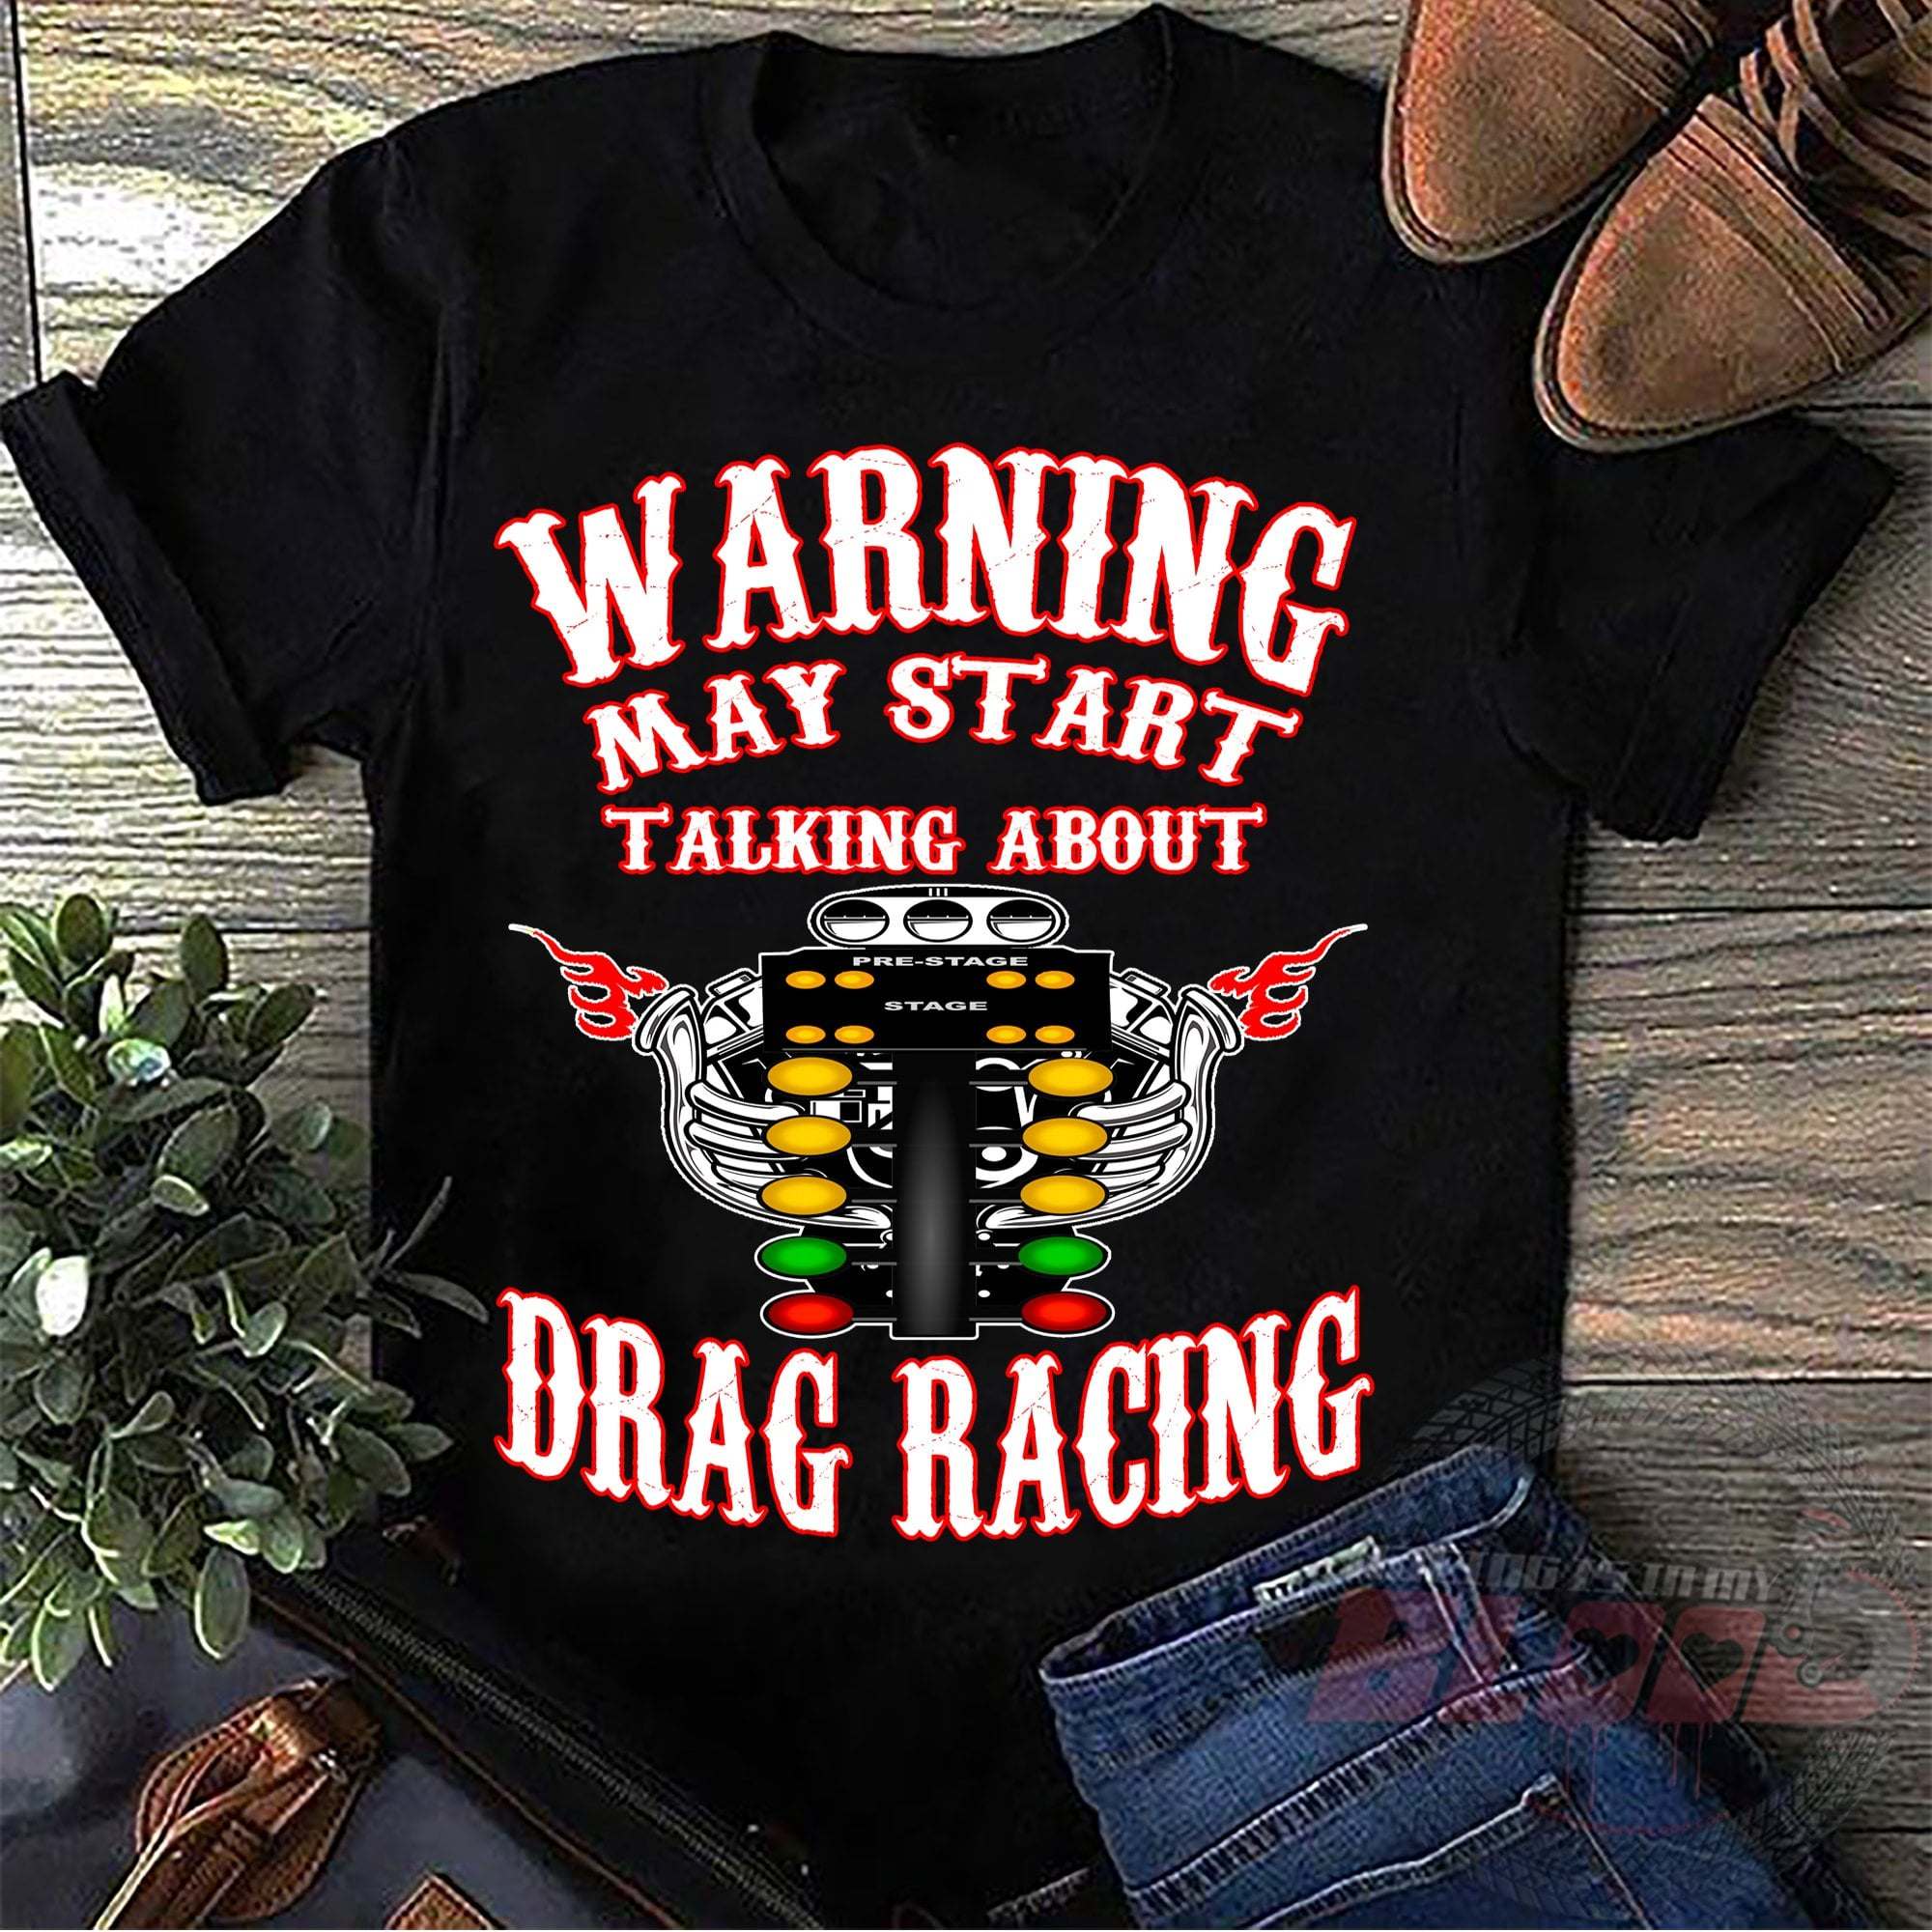 Drag Racing - Warning may start talking about drag racing